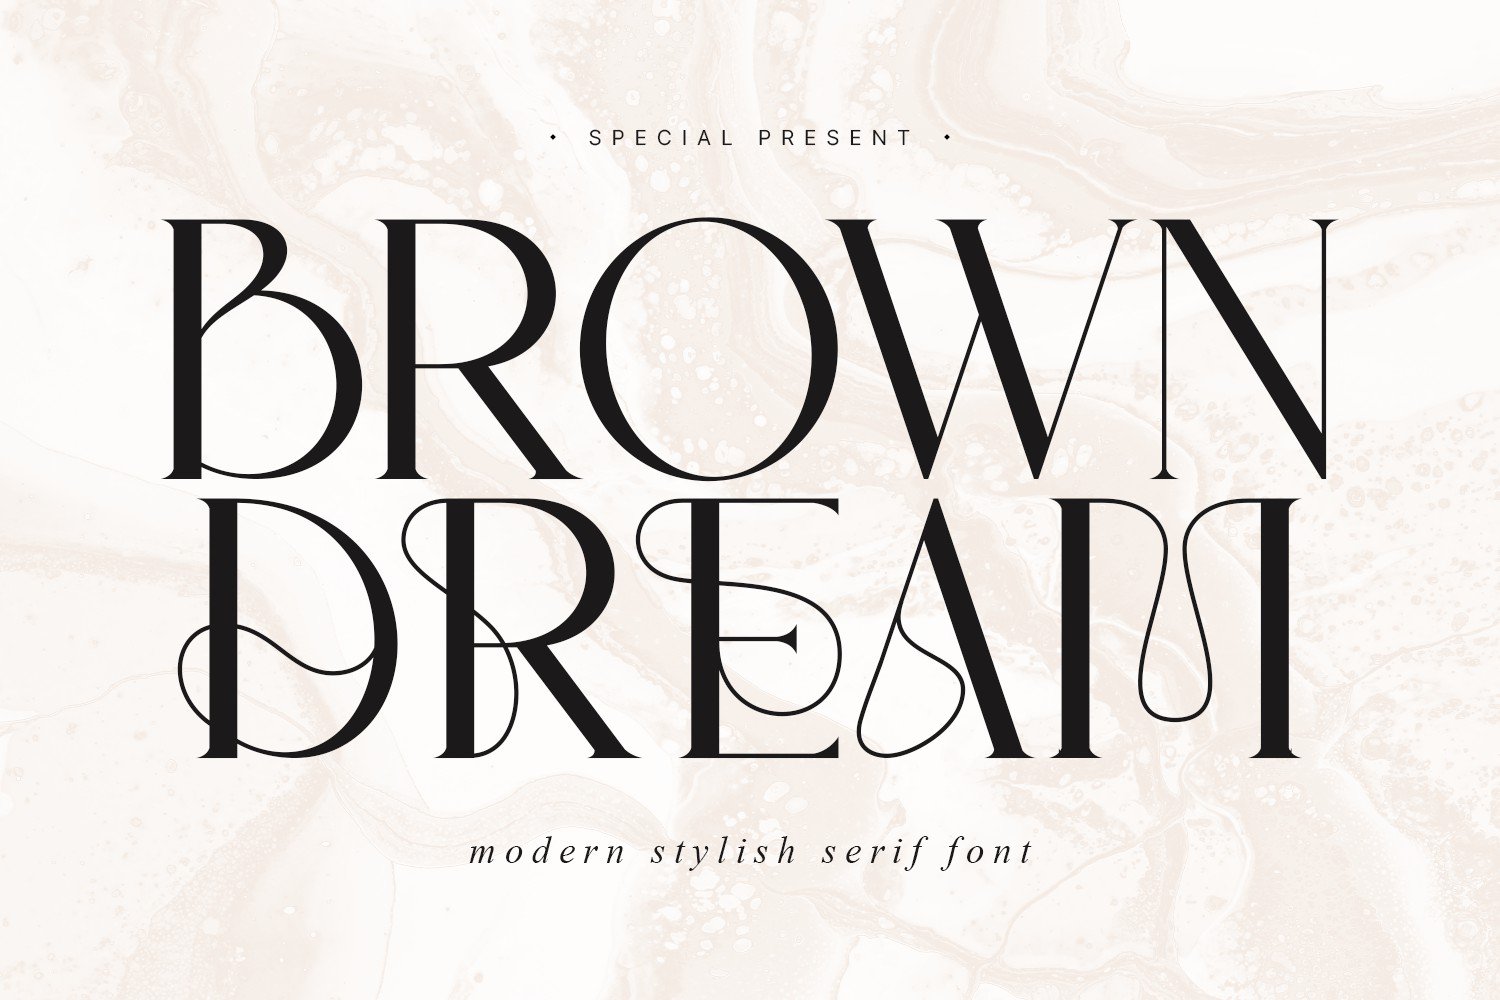 Brown Dream - Modern Stylish Serif cover image.